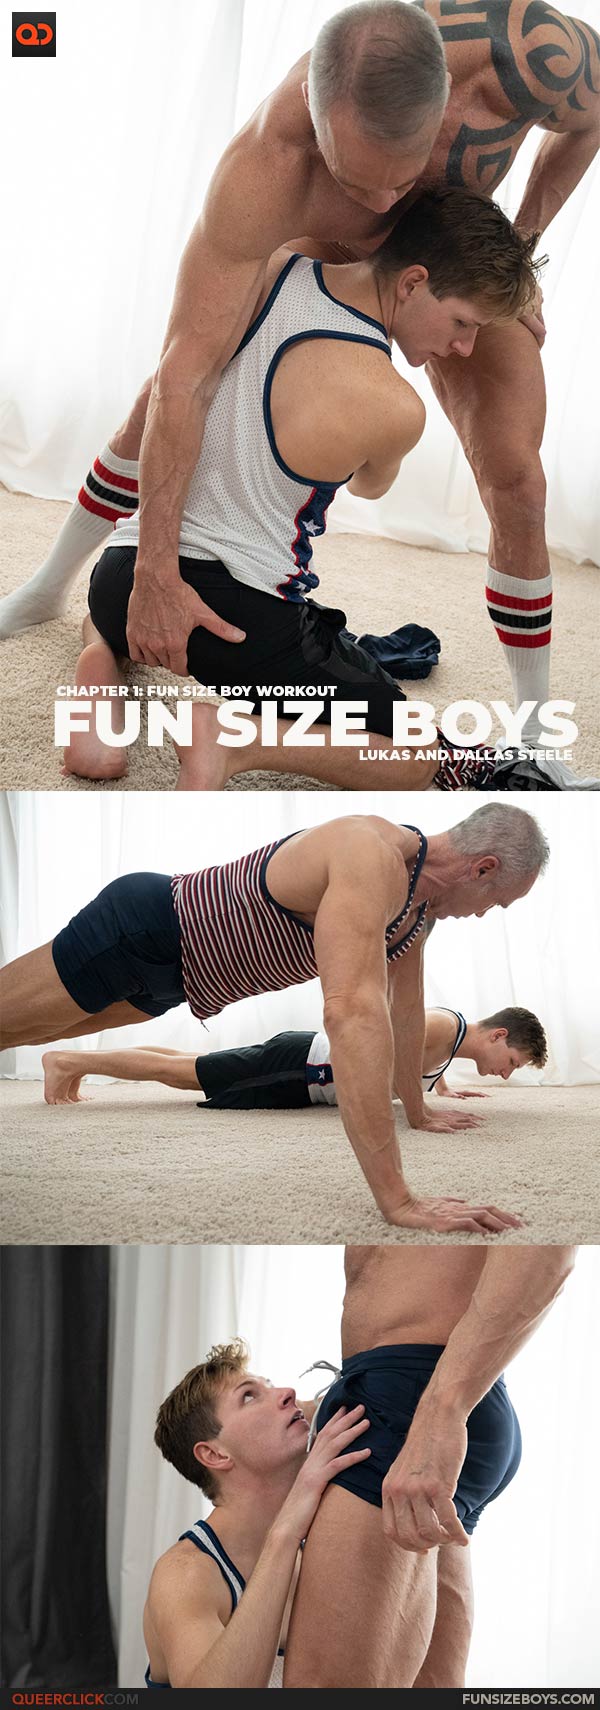 Fun Size Boys: Lukas and Dallas Steele - Chapter 1: Fun Size Boy Workout